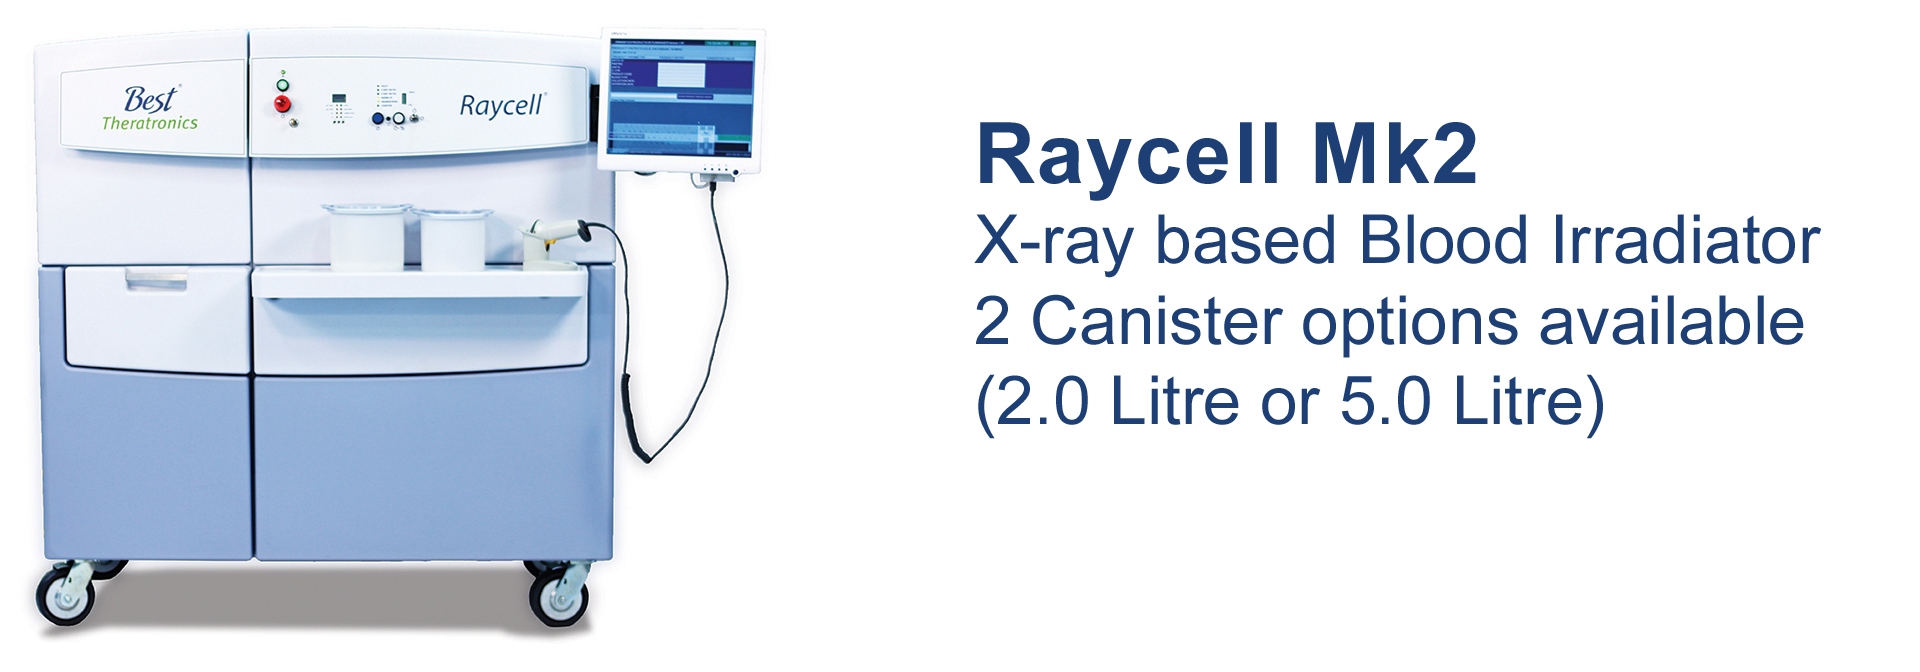 Raycell Mk2